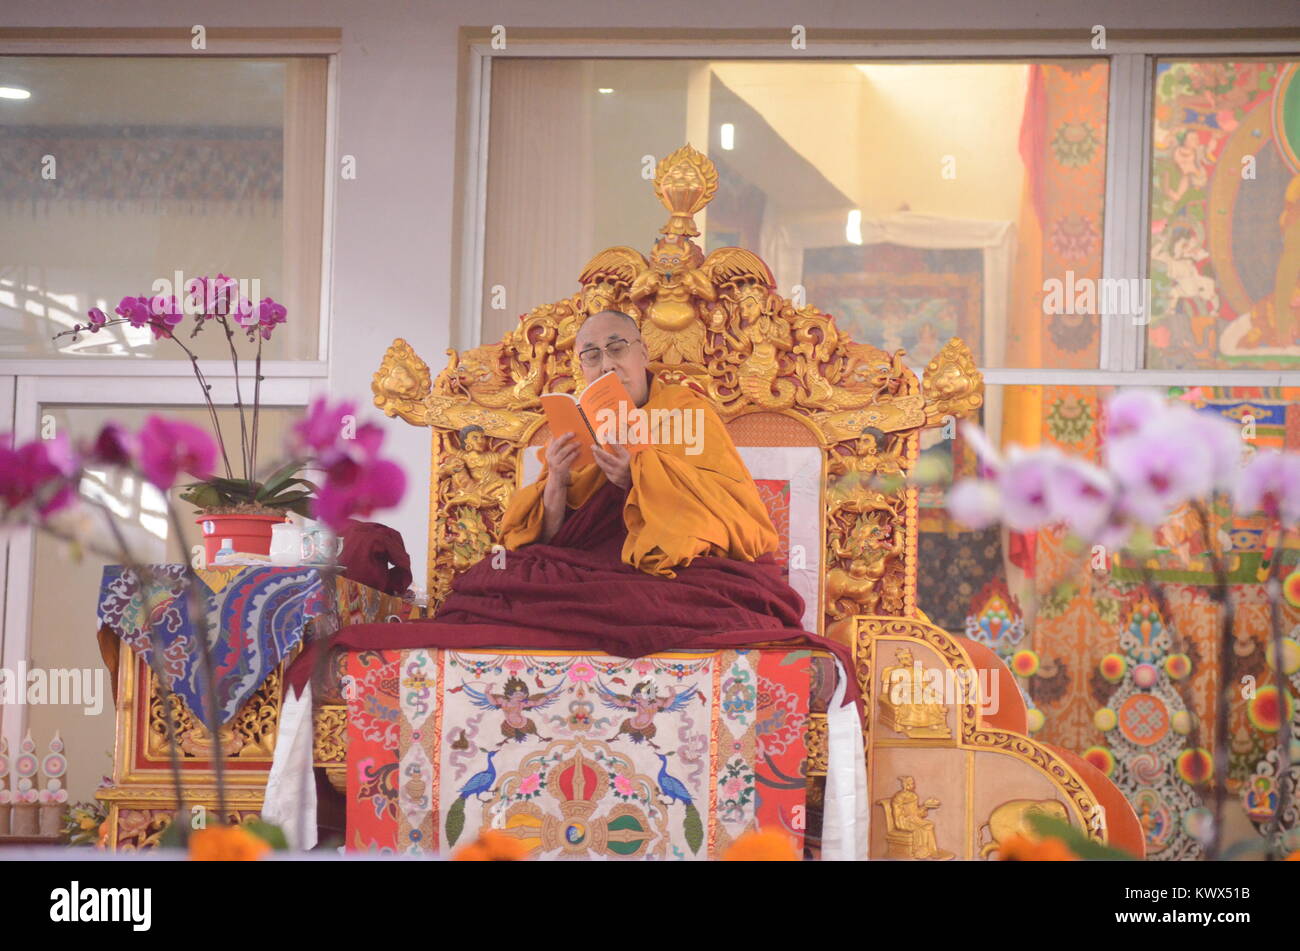 Bodh gaya, India 05 January 2018 - The Holiness 14th Dalai Lama is addressing a   gathering during the special teaching  session at Bodh gaya,  India. Stock Photo